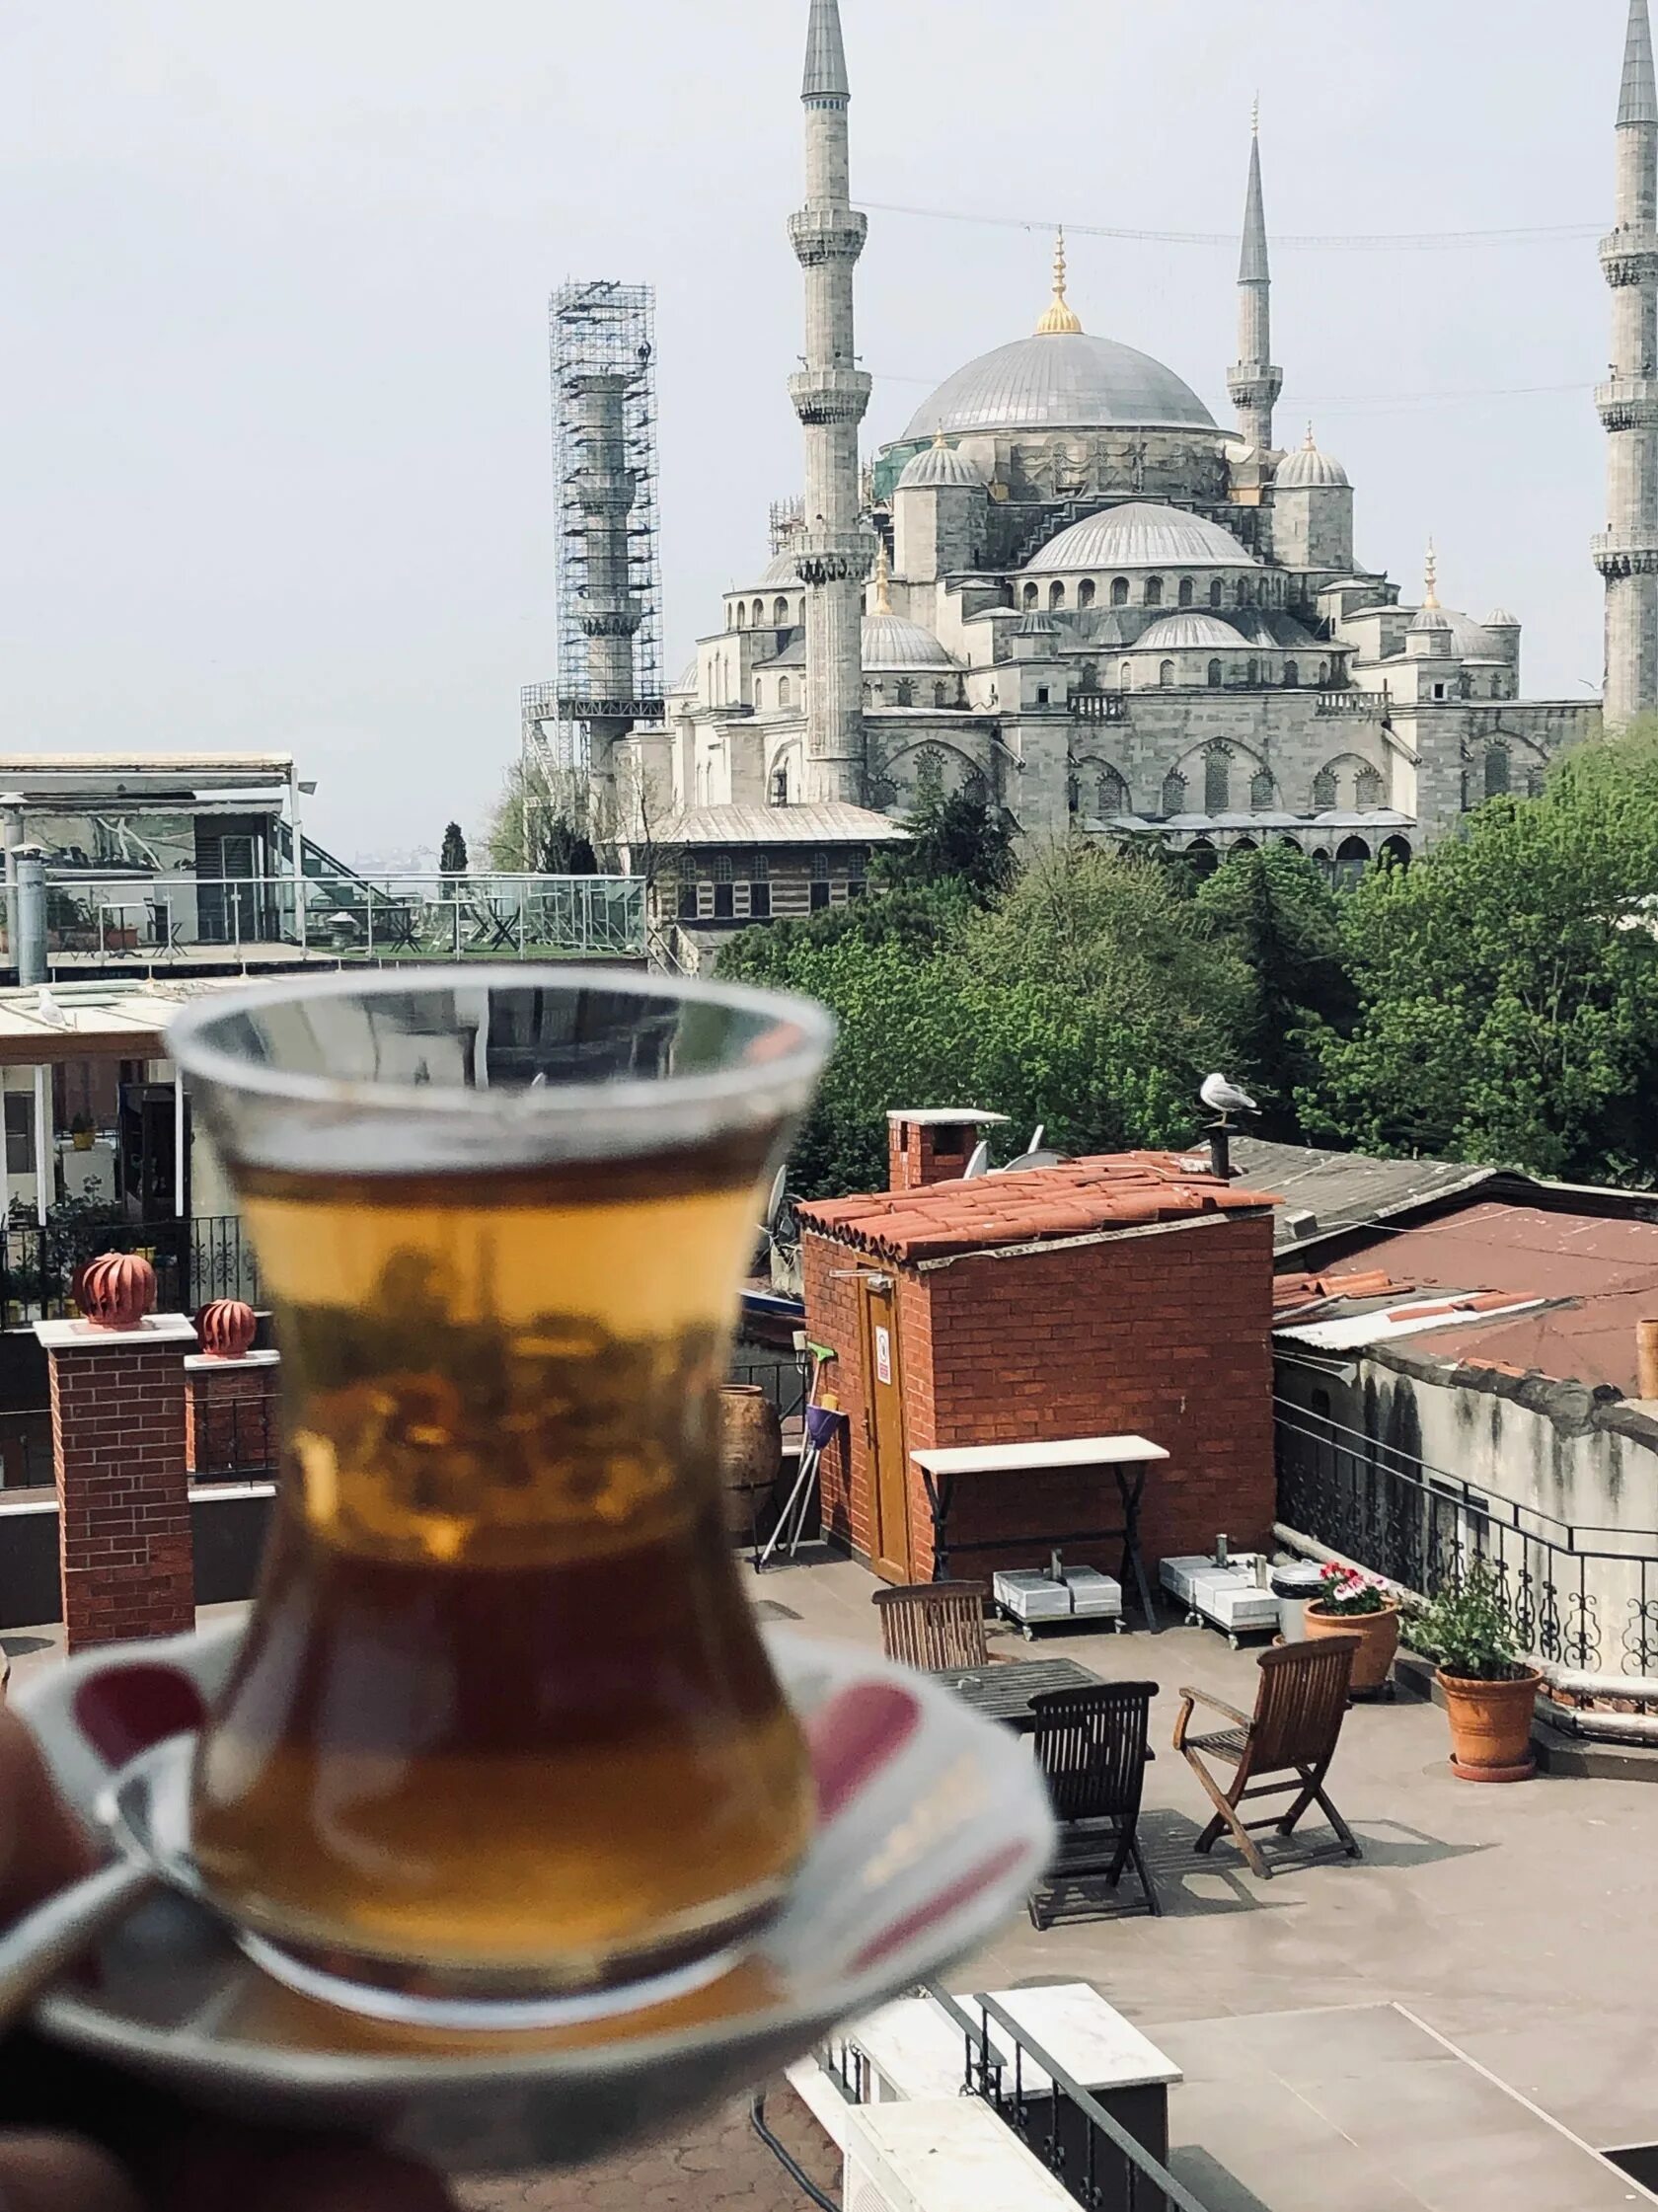 Стамбул часовой. Стамбул столица 3 империй. Стамбул столица трех империй. Стамбул столица. Стамбул почему не столица.